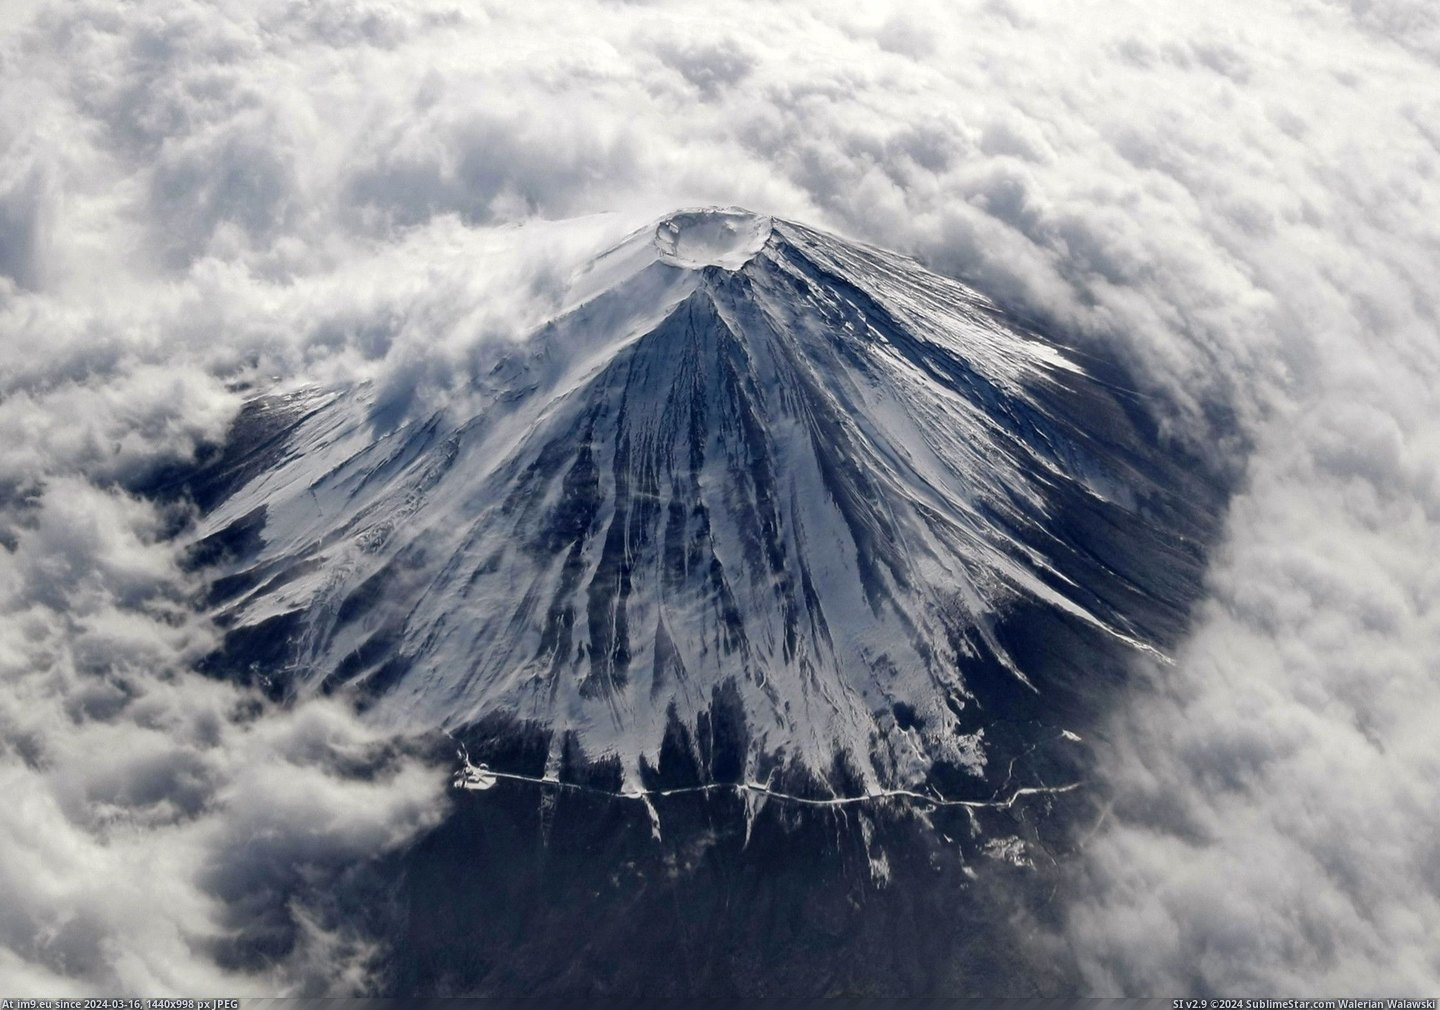 #Mount #Fiji #Aerial [Earthporn] Mount Fiji - Aerial [2200x1537] Pic. (Изображение из альбом My r/EARTHPORN favs))